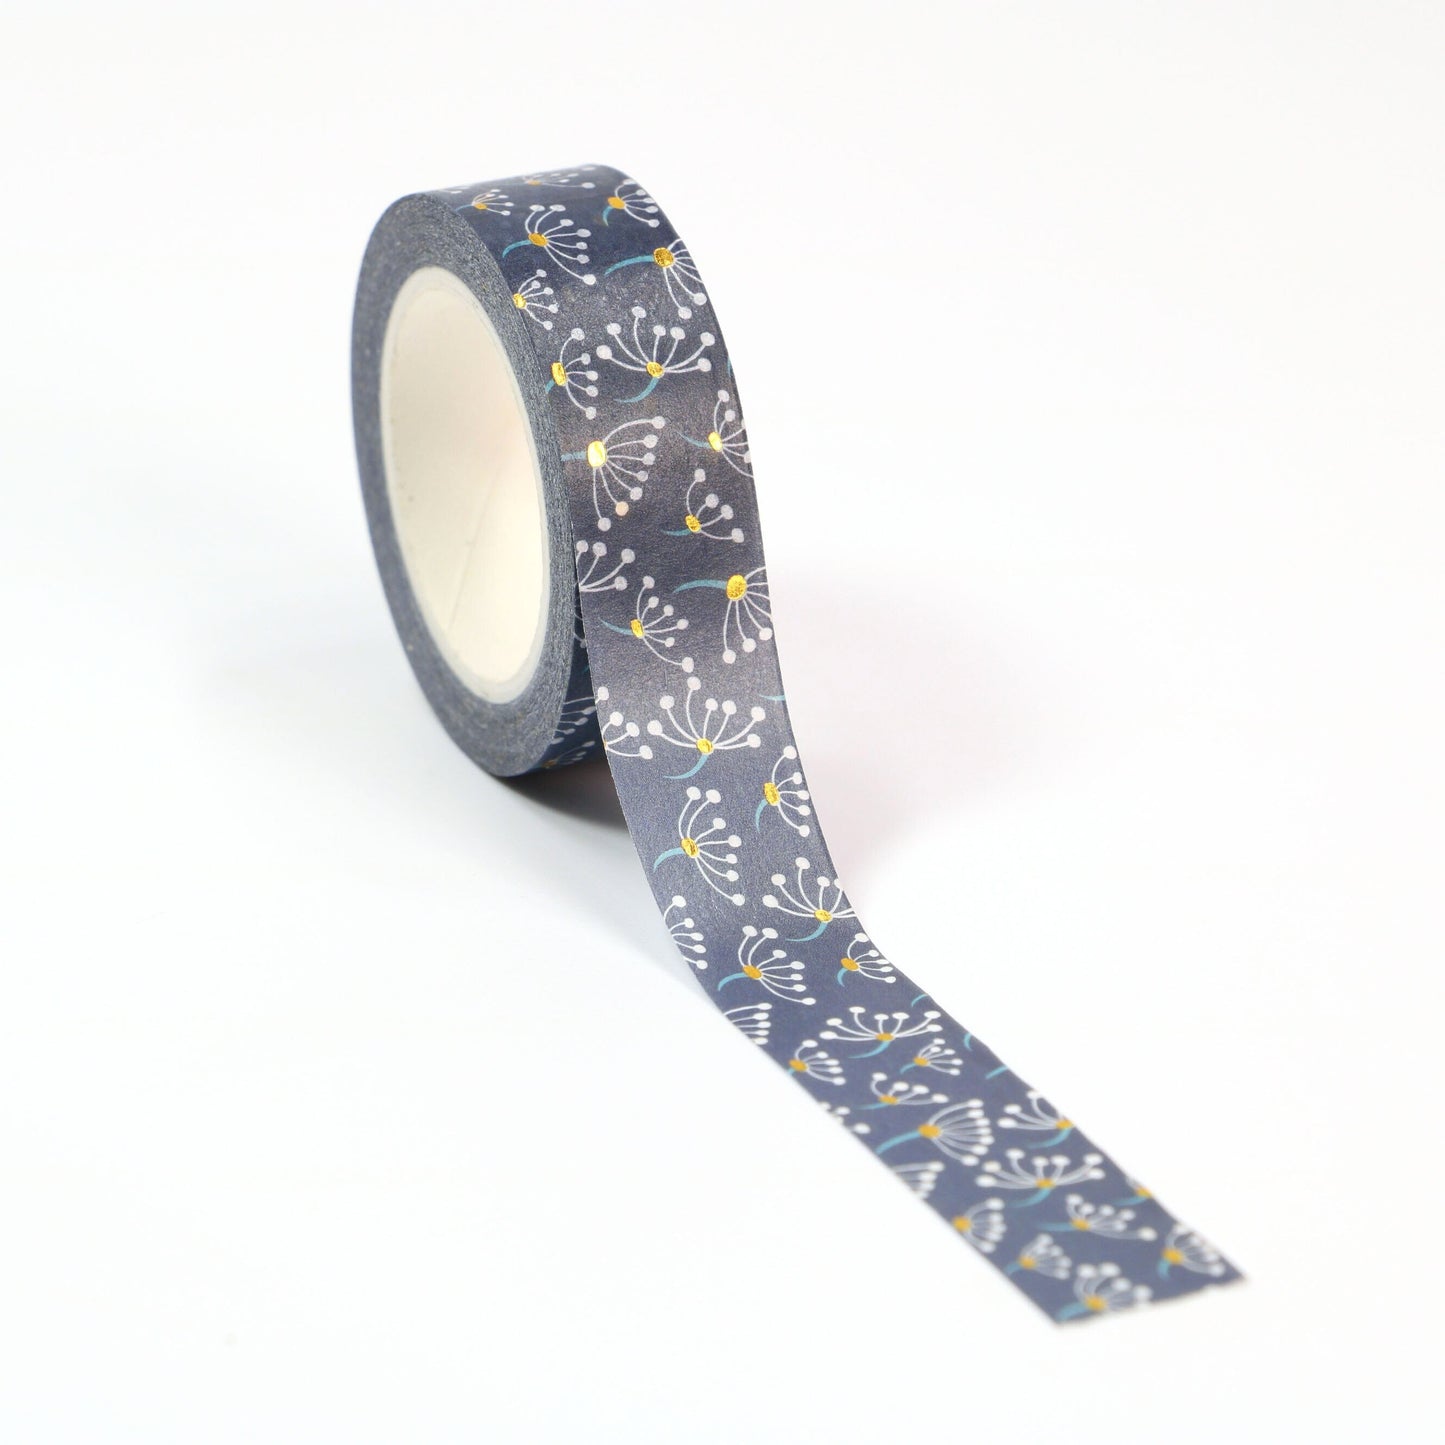 Navy Blue Dandelion Gold Foiled Washi Tape | 15mm x 10m | Stationery Journalling Scrapbooking